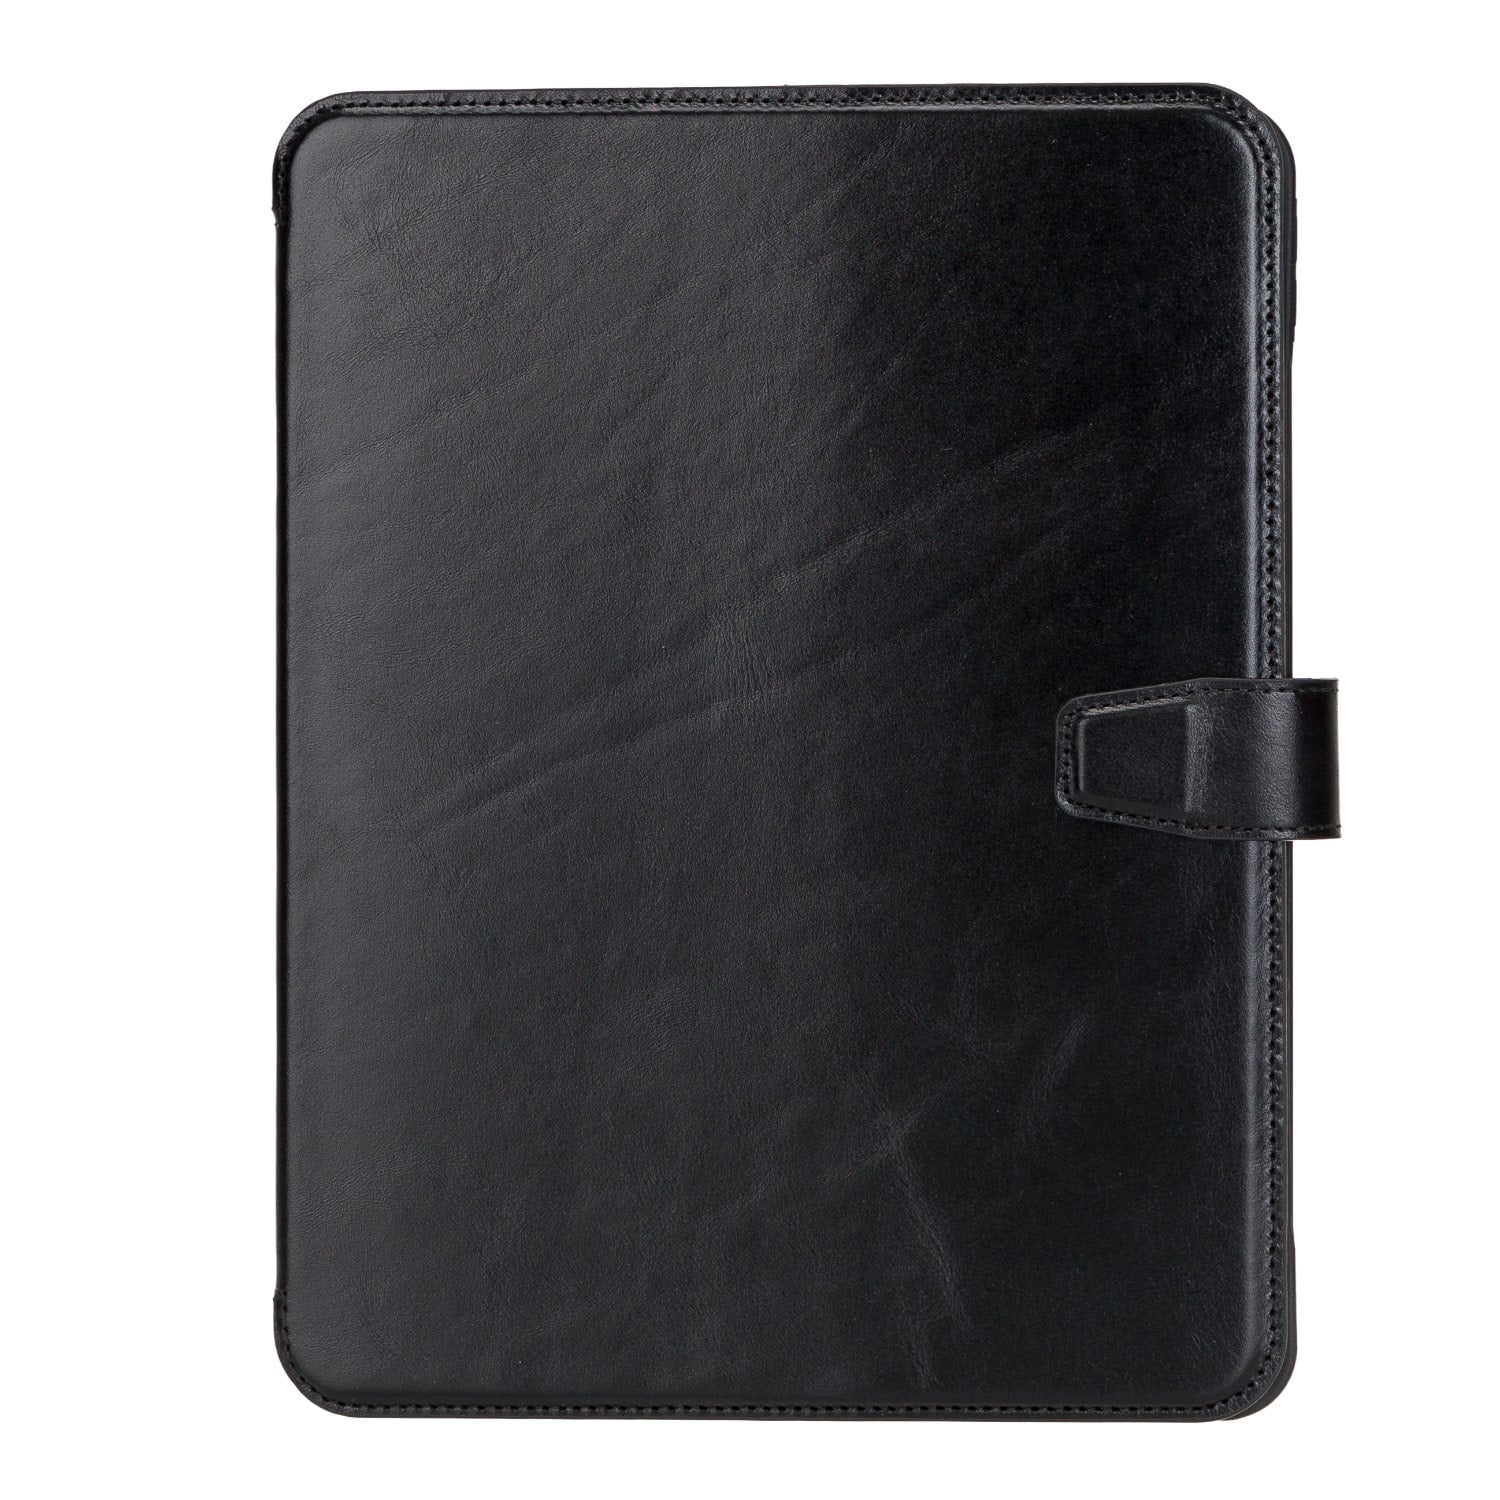 Black Leather iPad Air 10.9 Inc Smart Folio Case with Apple Pen Holder - Bomonti - 3